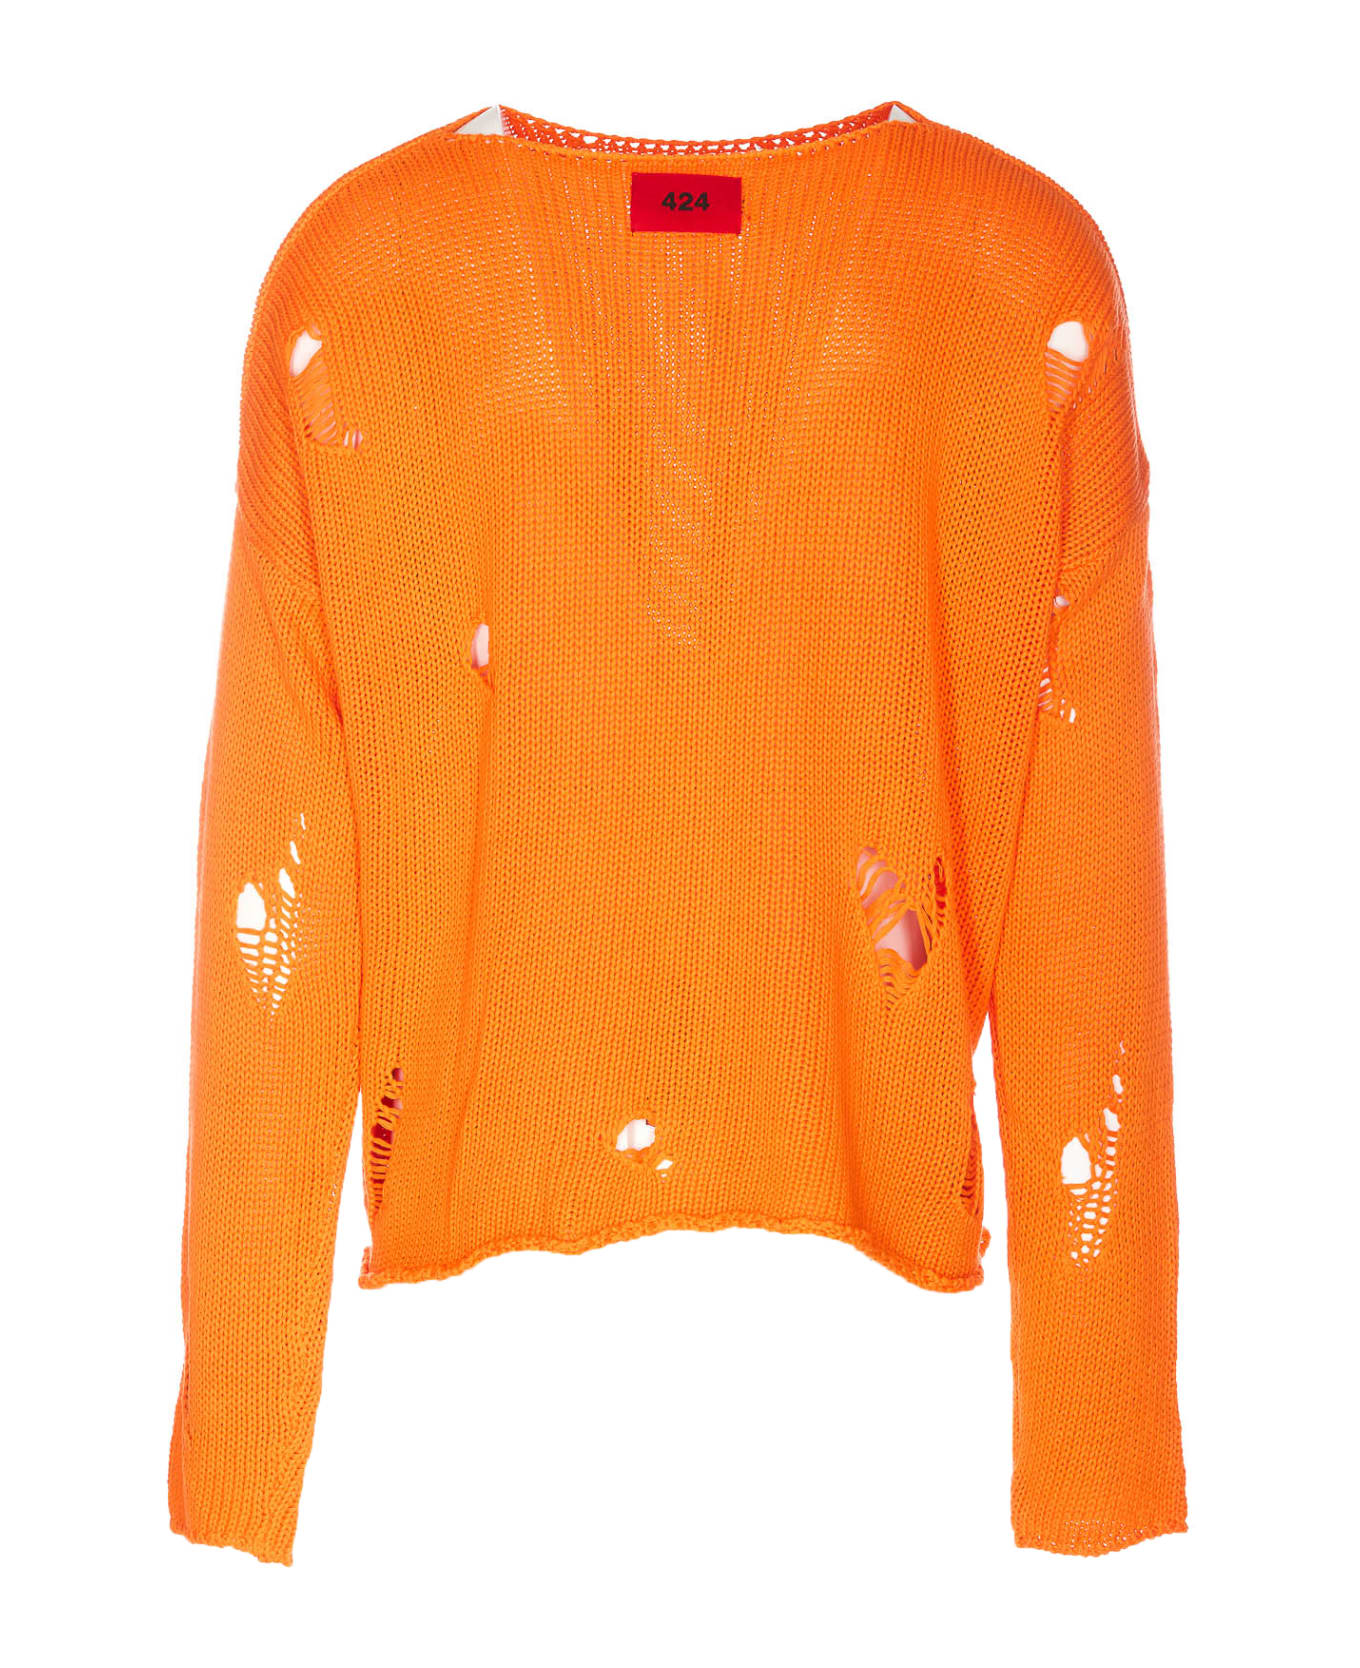 FourTwoFour on Fairfax Distressed Sweater - Orange